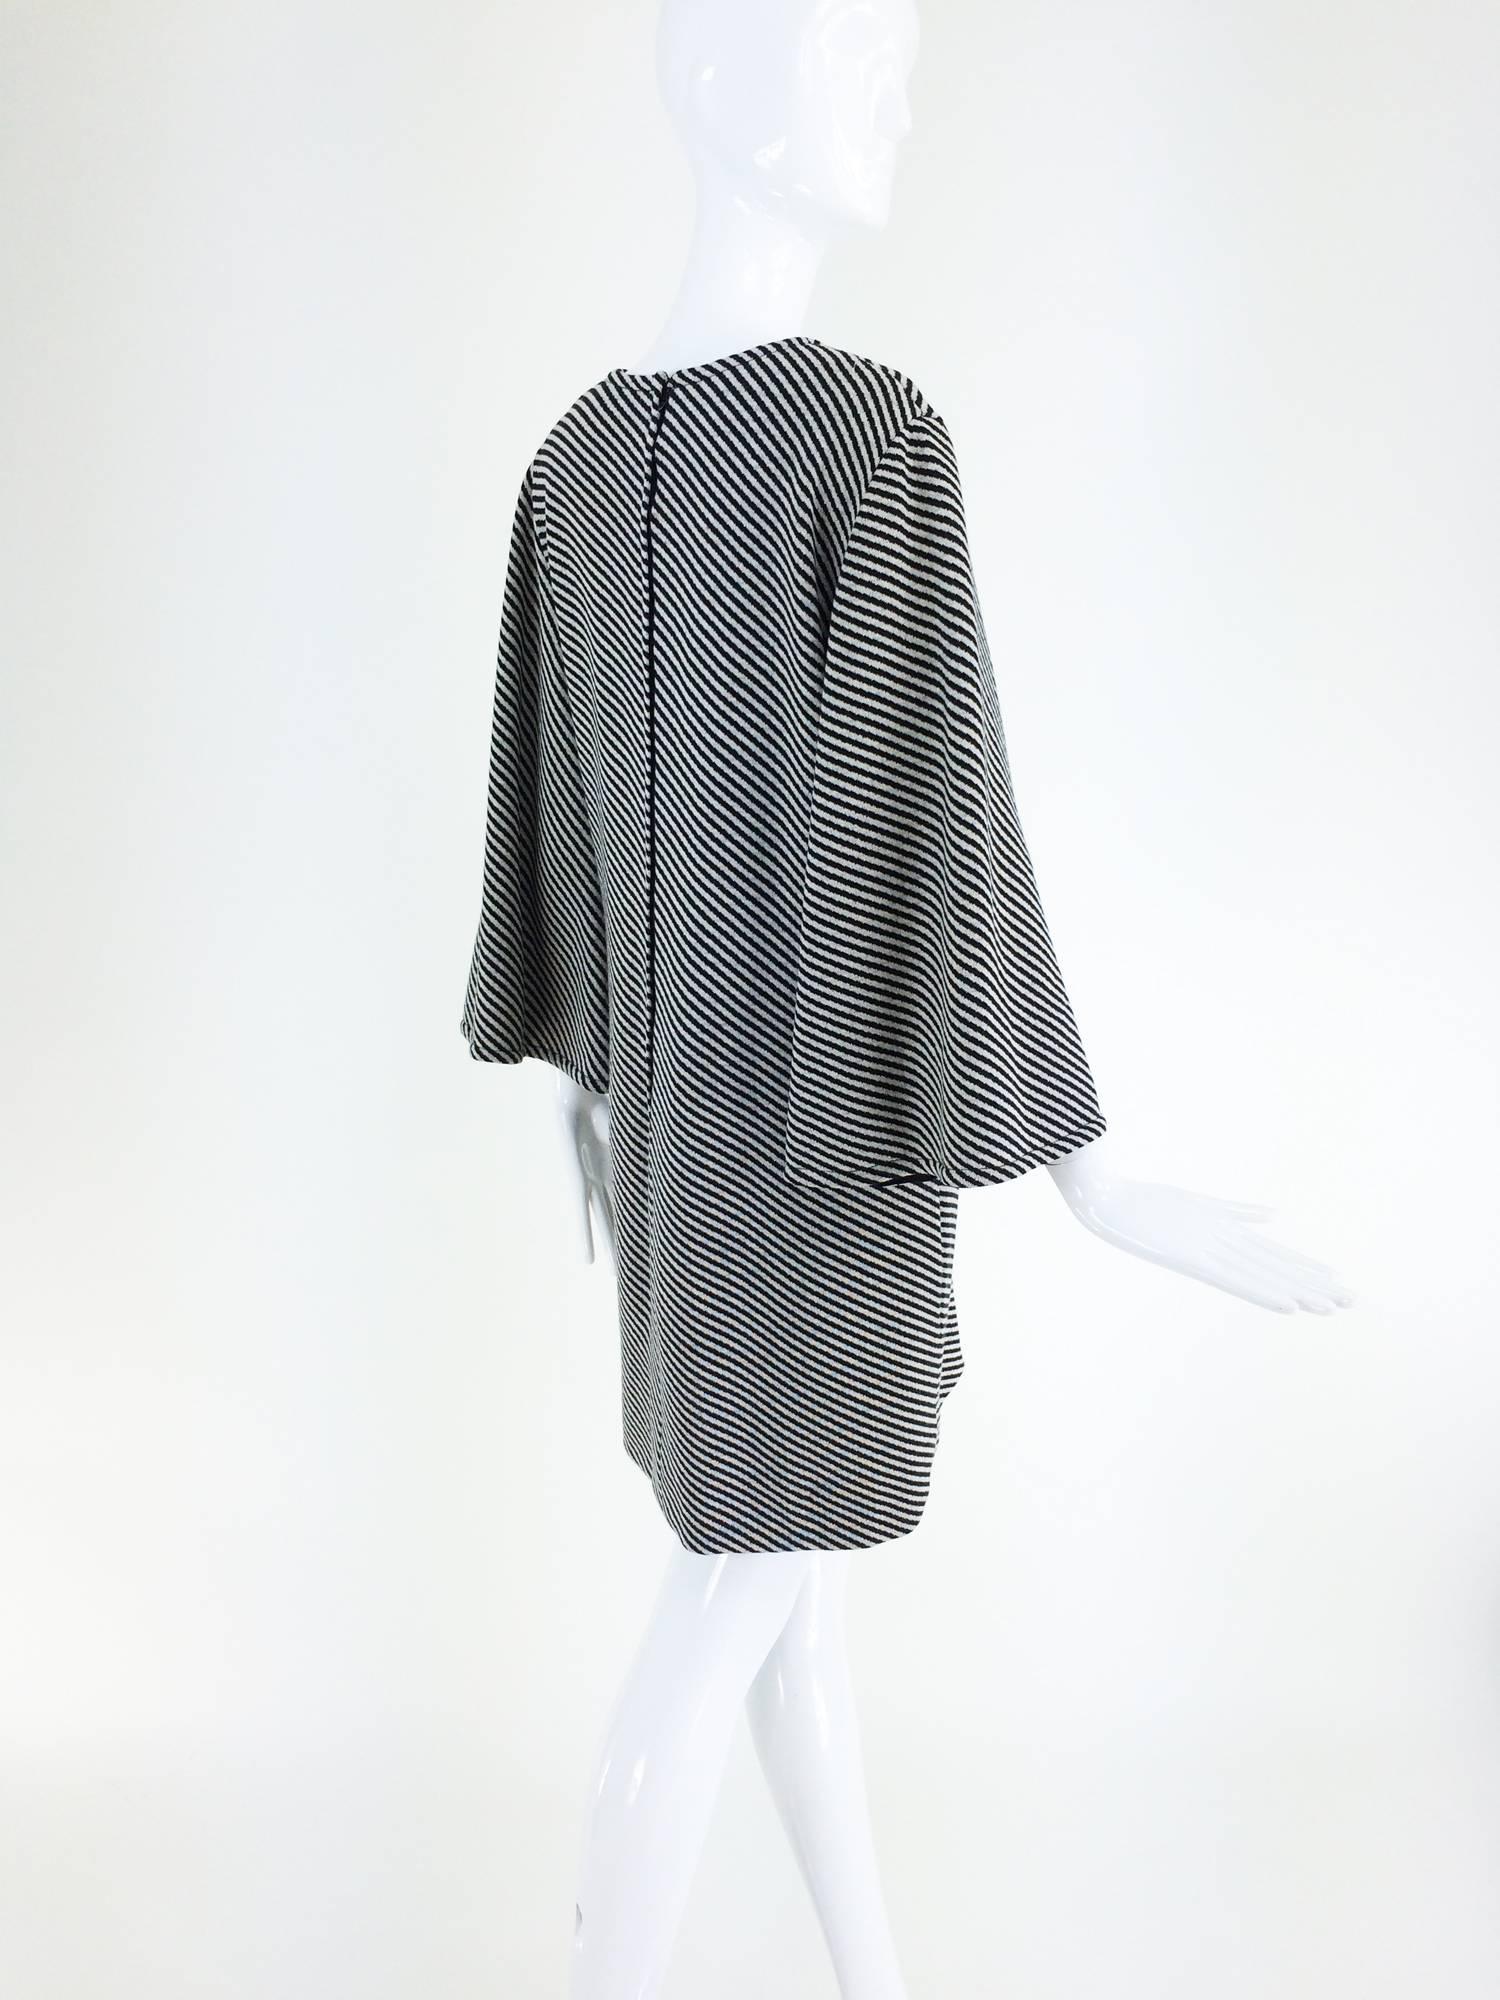 Rudi Gernreich Mod black & white bell sleeve dress 1960s 2